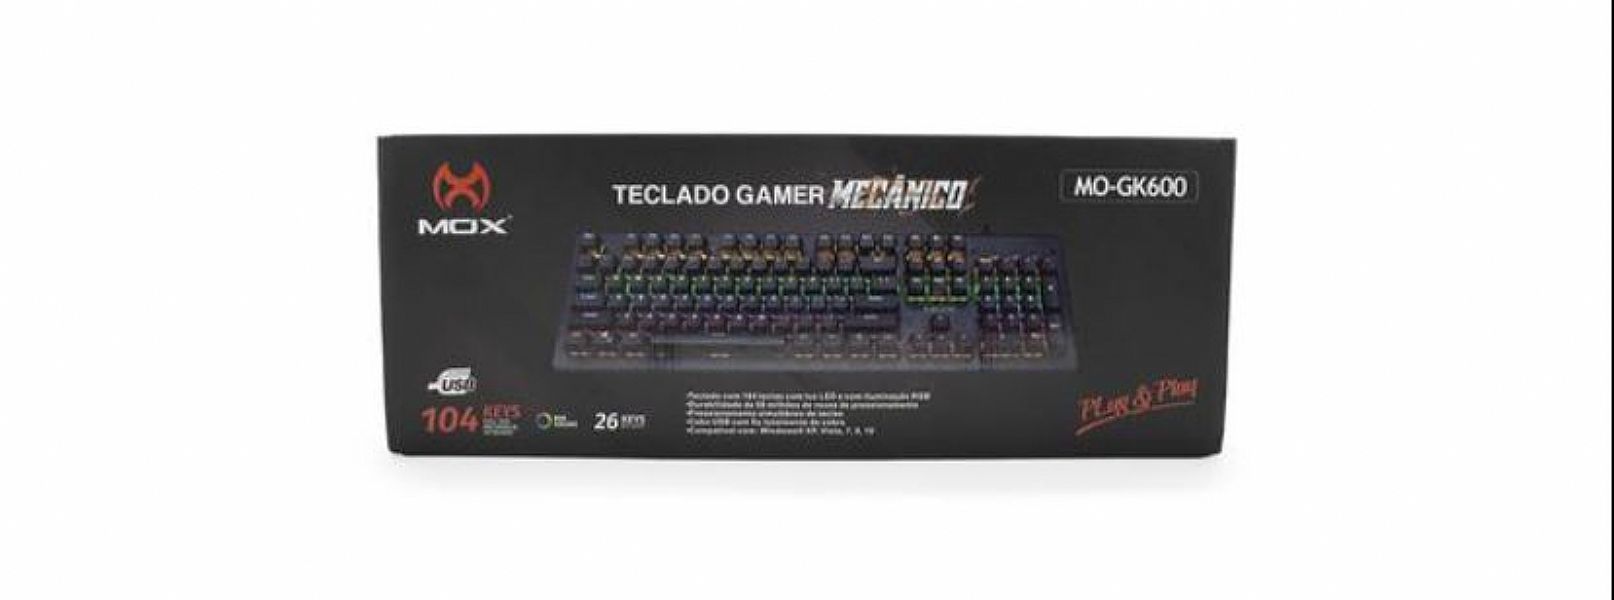 Teclado Usb Gamer Mecânico Mox - Mo-gk600